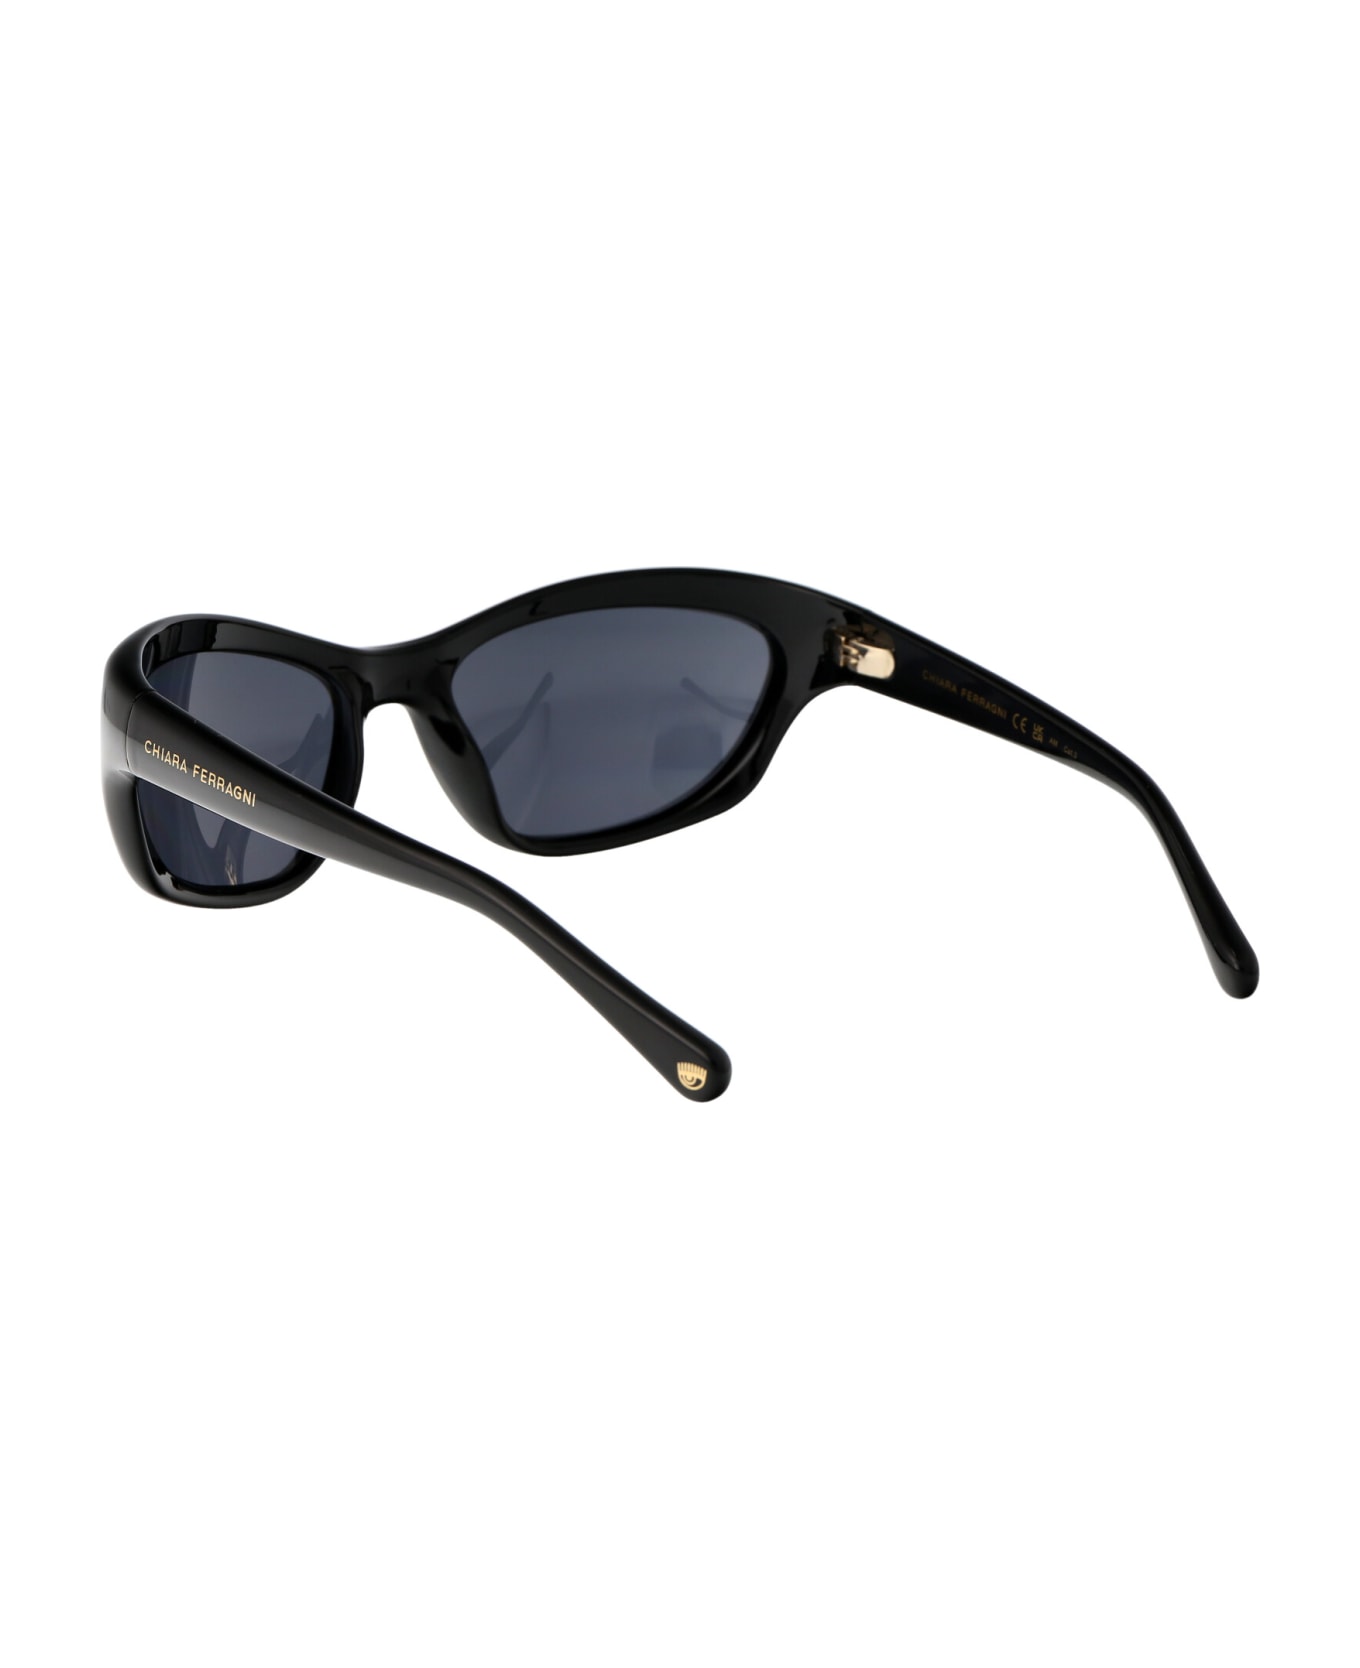 Chiara Ferragni Cf 7030/s Sunglasses - 807IR BLACK サングラス